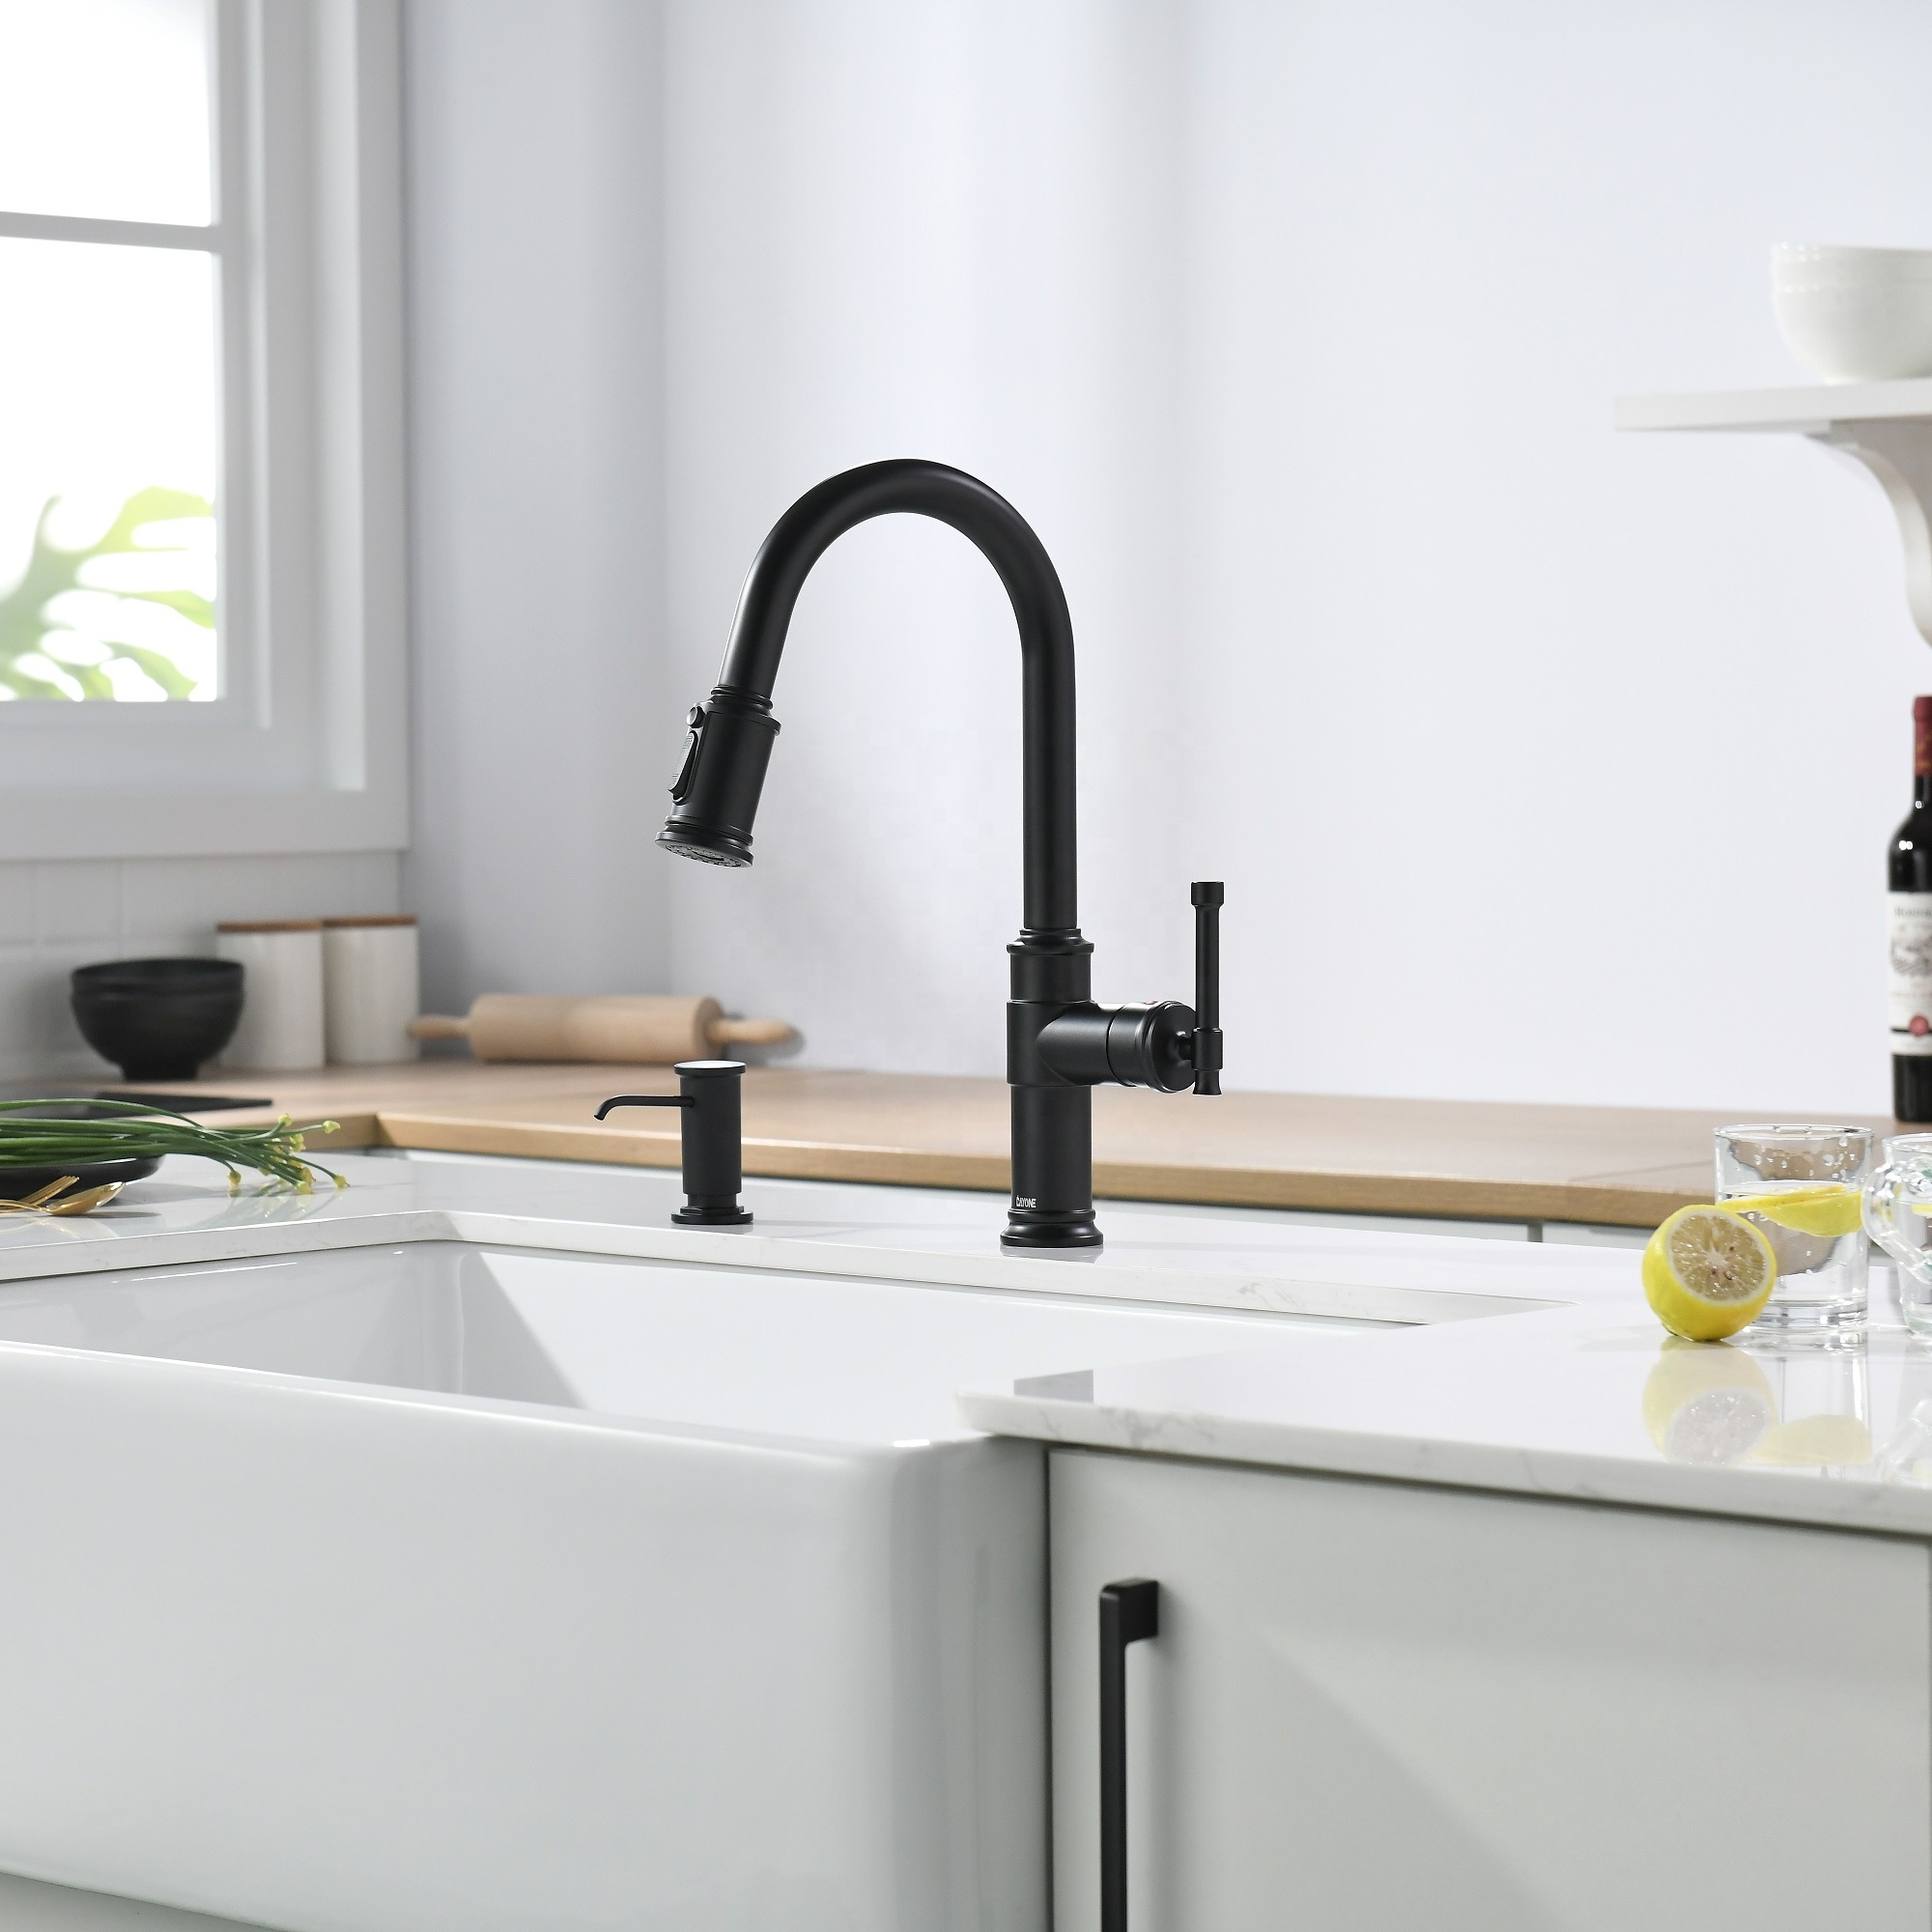 Kitchen Faucet With Soap Dispenser Black Kitchen Faucet Pull Sprayer In Matte Black